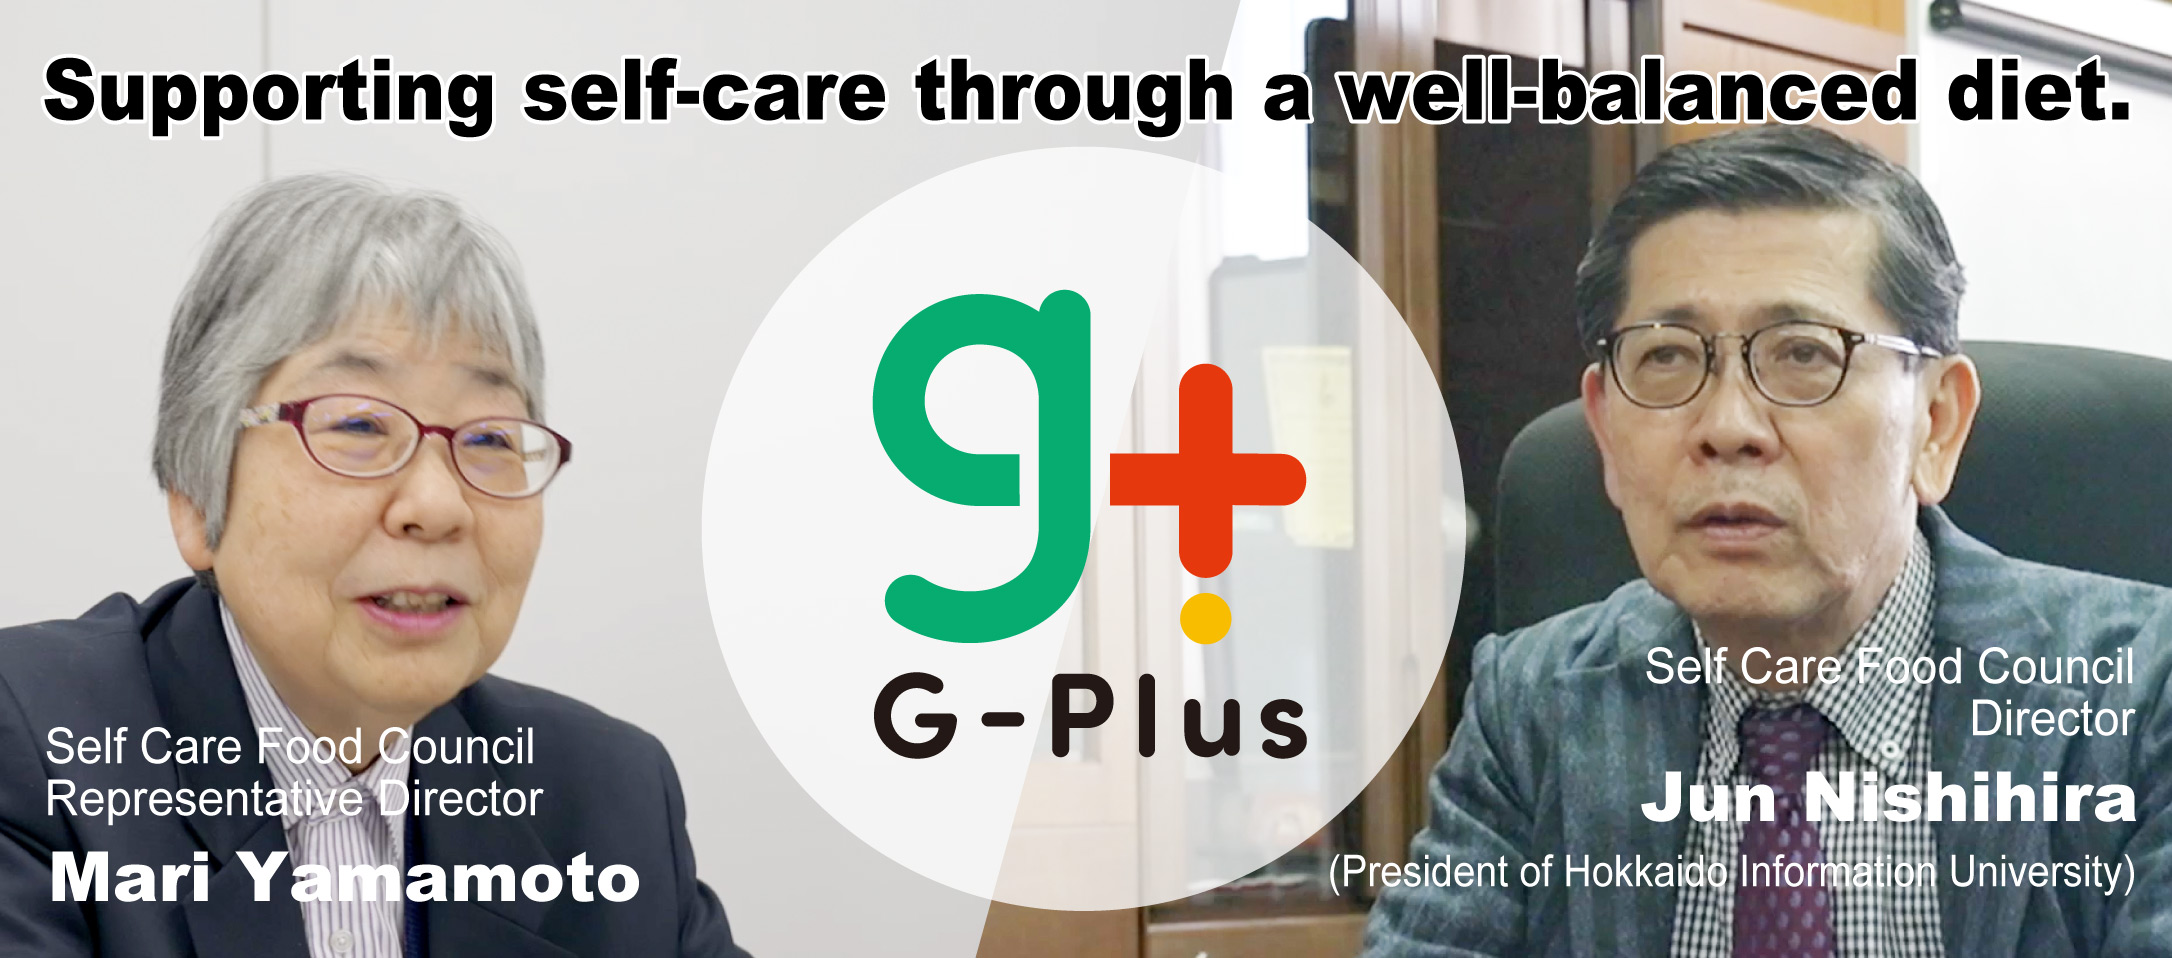 G-Plus,Supporting self-care through a well-balanced diet.,Self Care Food CouncilRepresentative Director Mari Yamamoto,Self Care Food Council
Director Jun Nishihira (President of Hokkaido Information University)